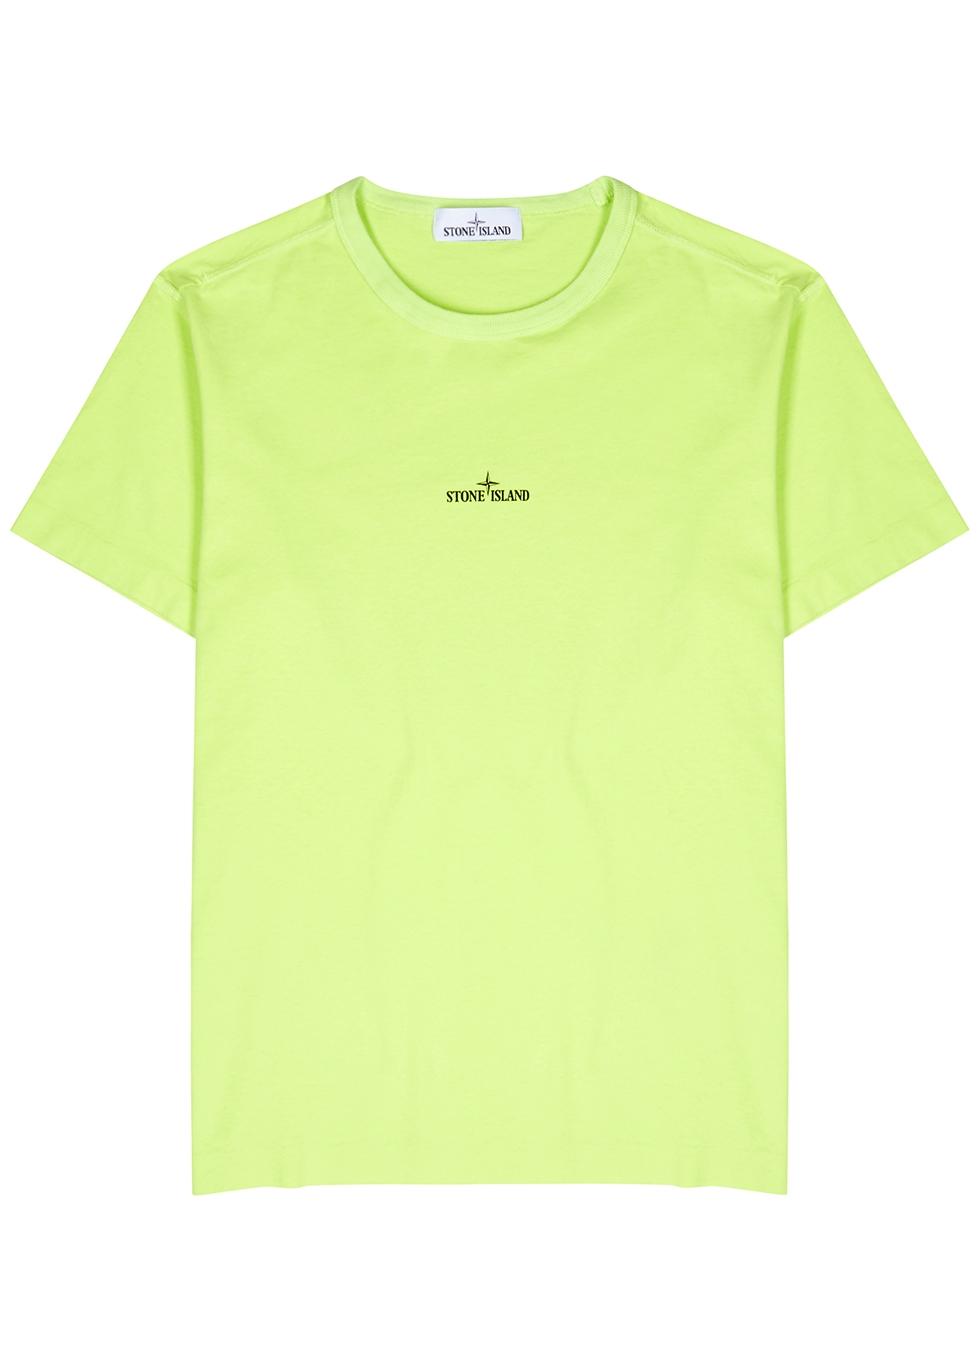 Stone Island Neon Green Cotton T-shirt for Men - Lyst